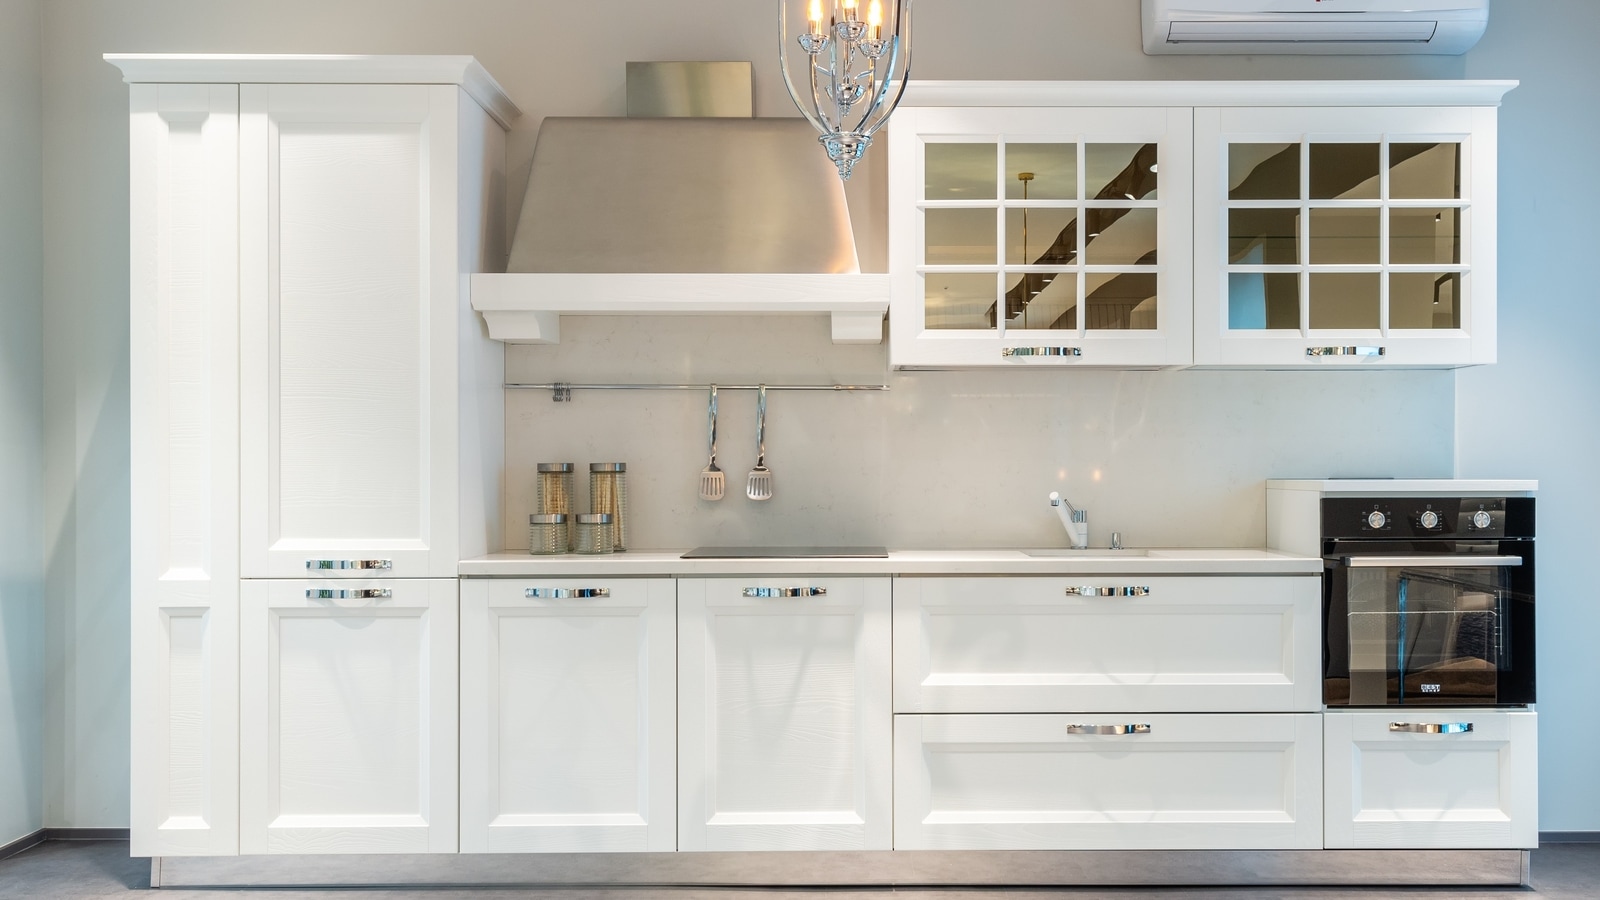 Home interior decor tips to nail an open kitchen design